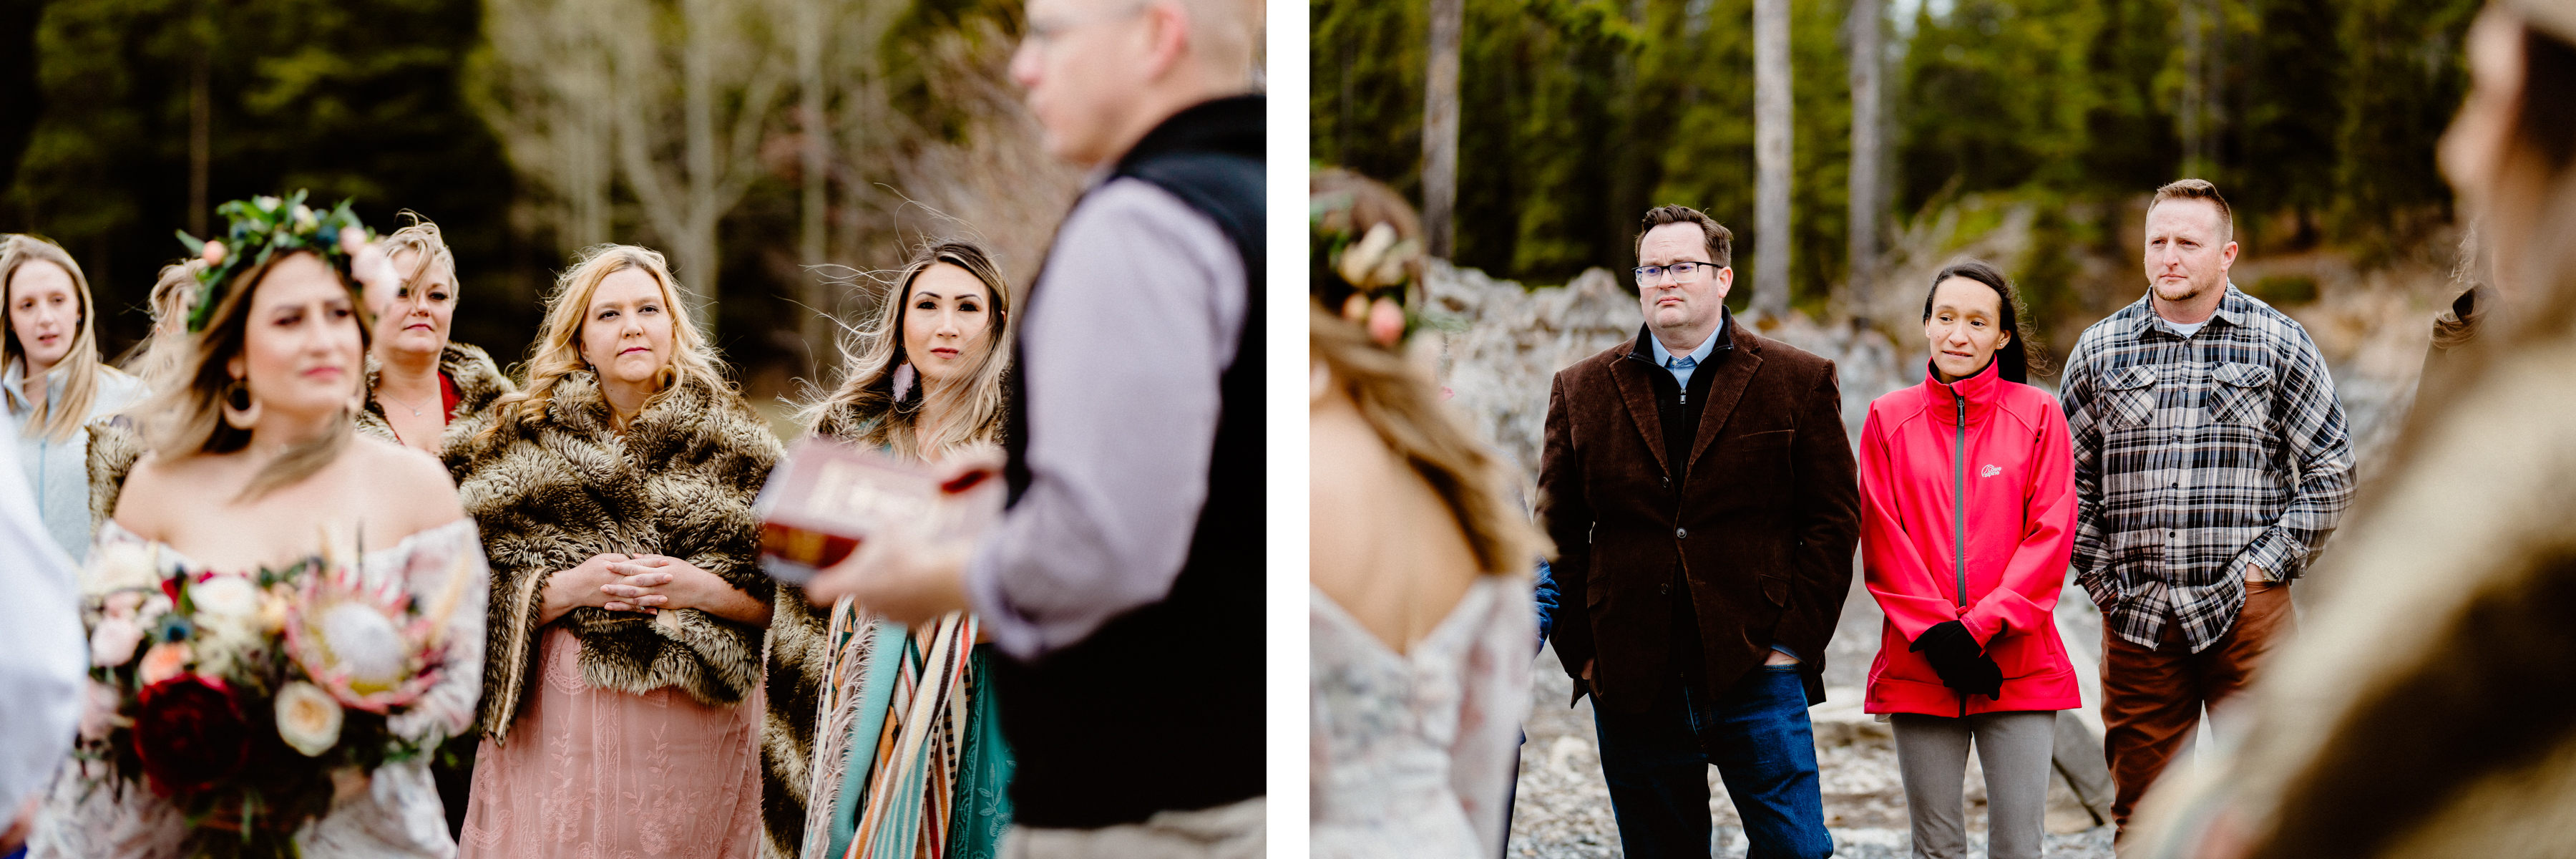 Stormy and Rainy Banff Wedding Photography - Photo 9